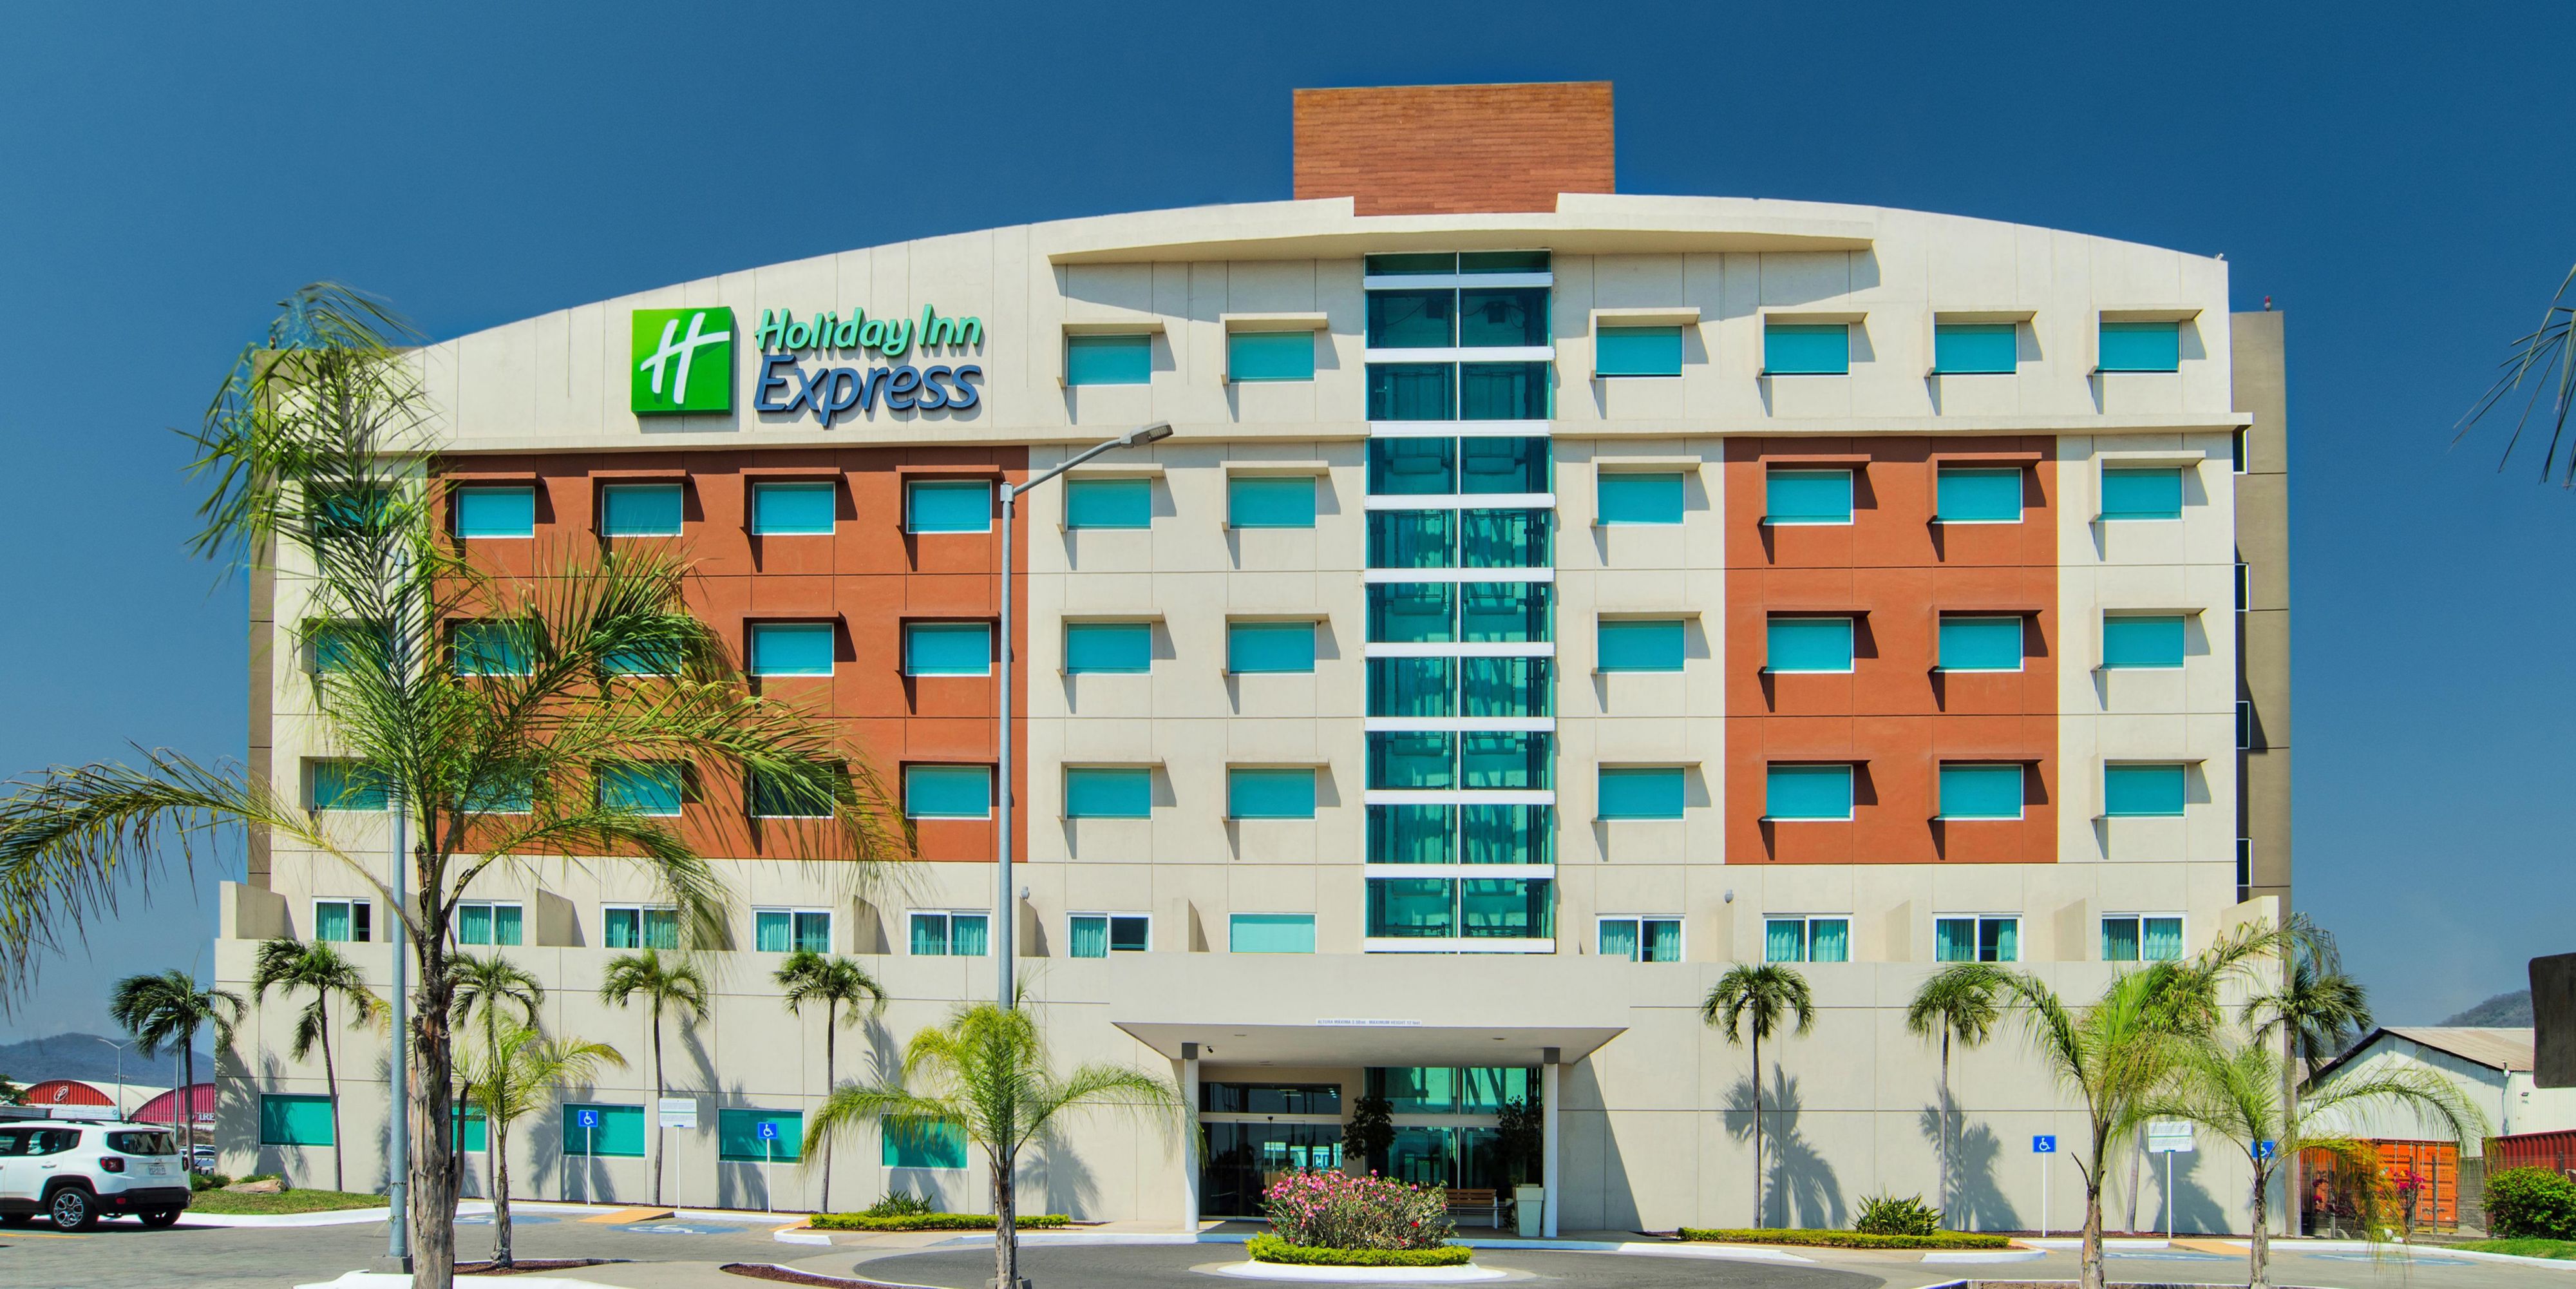 Holiday Inn Express Manzanillo - Manzanillo, Mexico